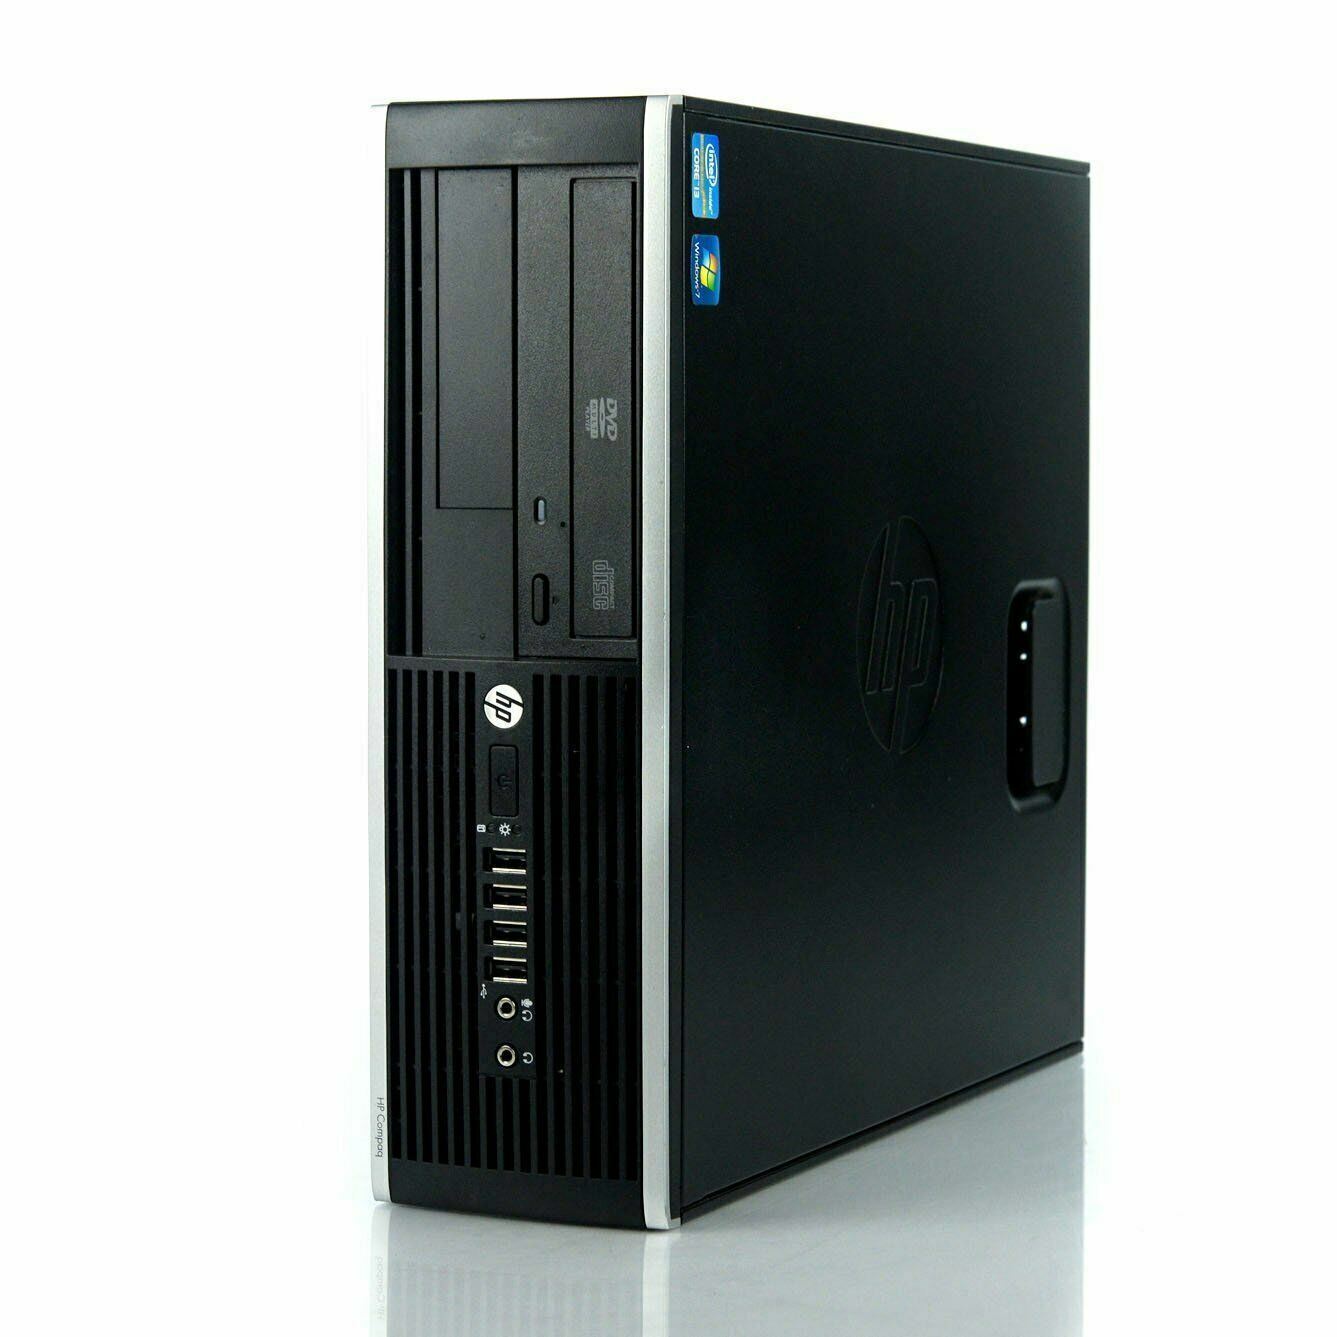 HP Desktop Computer Intel Core 2 Duo Processor 8GB 500GB 22